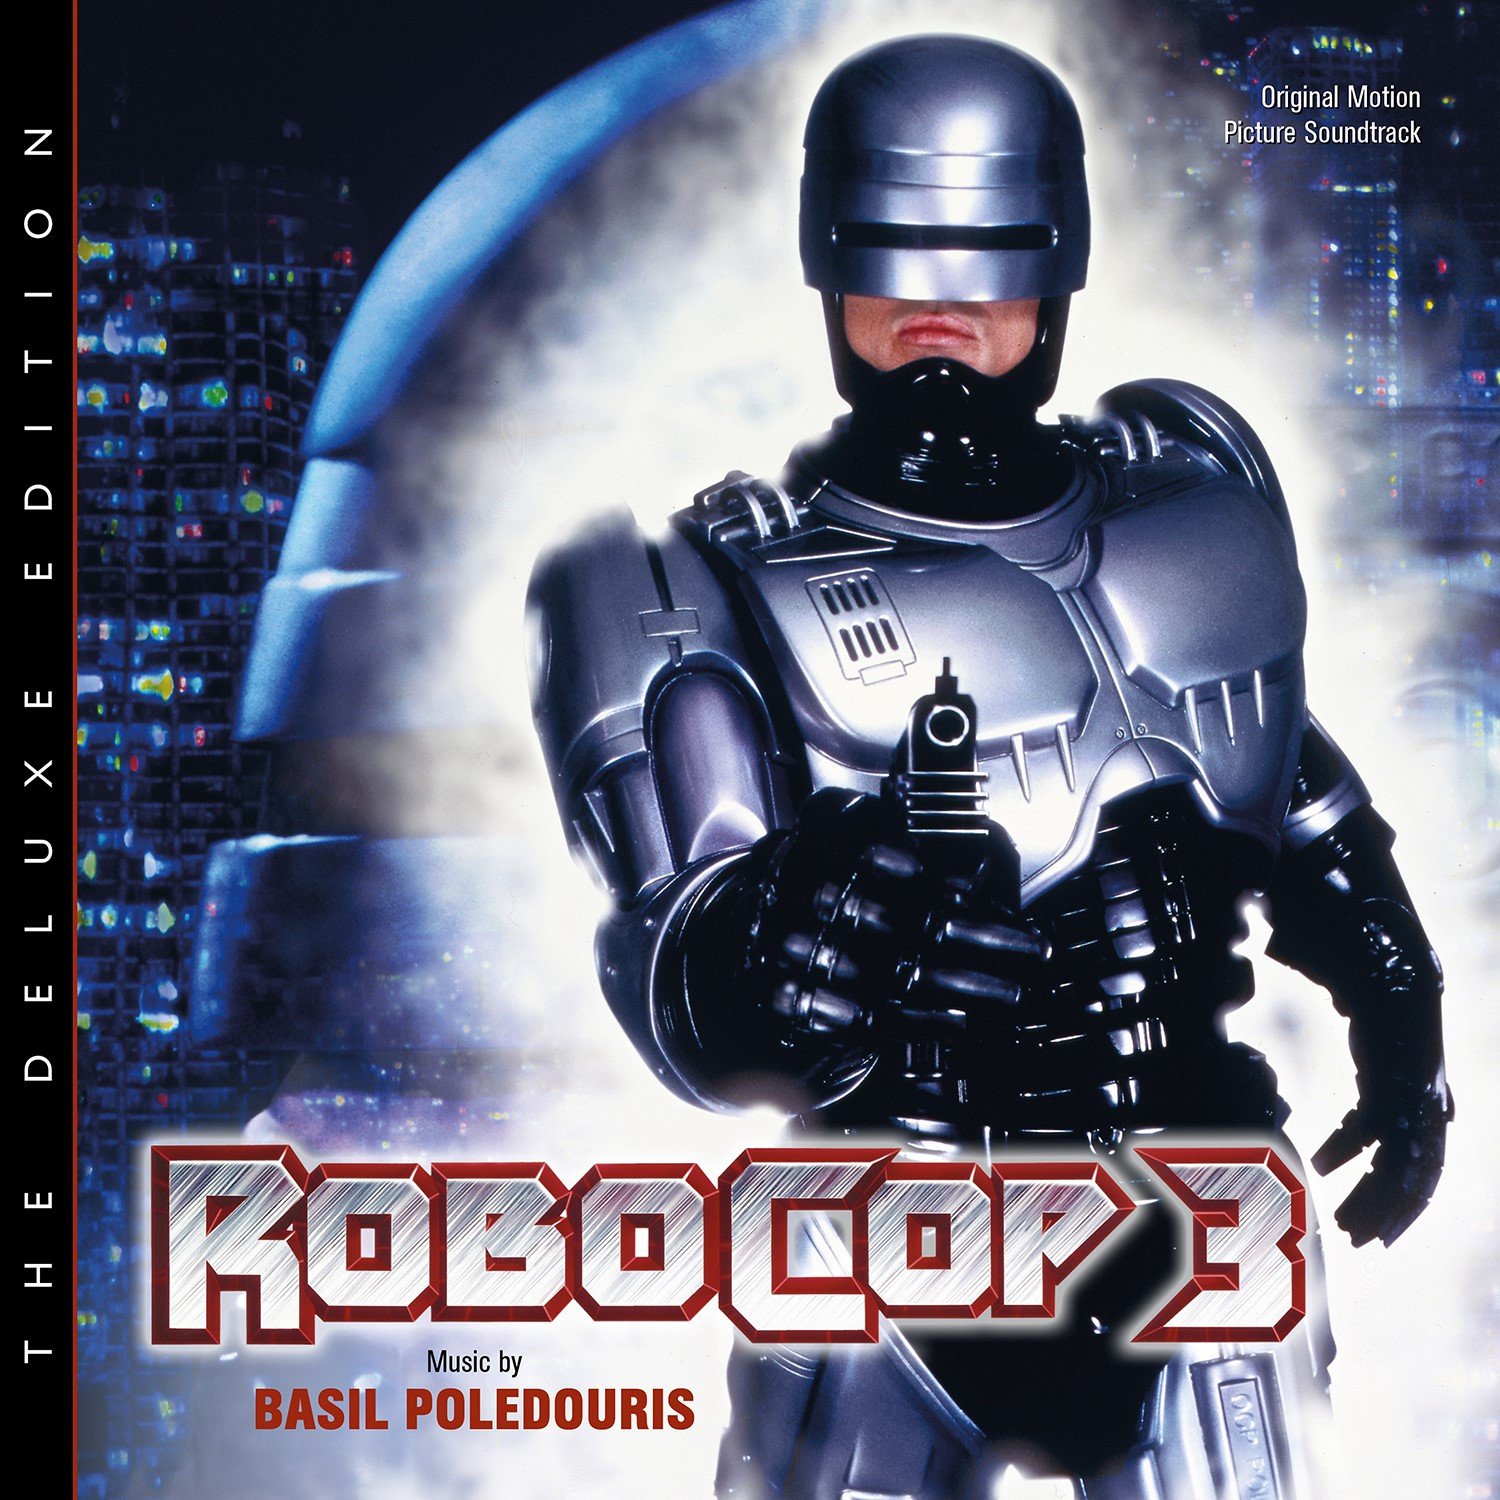 robocop 3 movie review